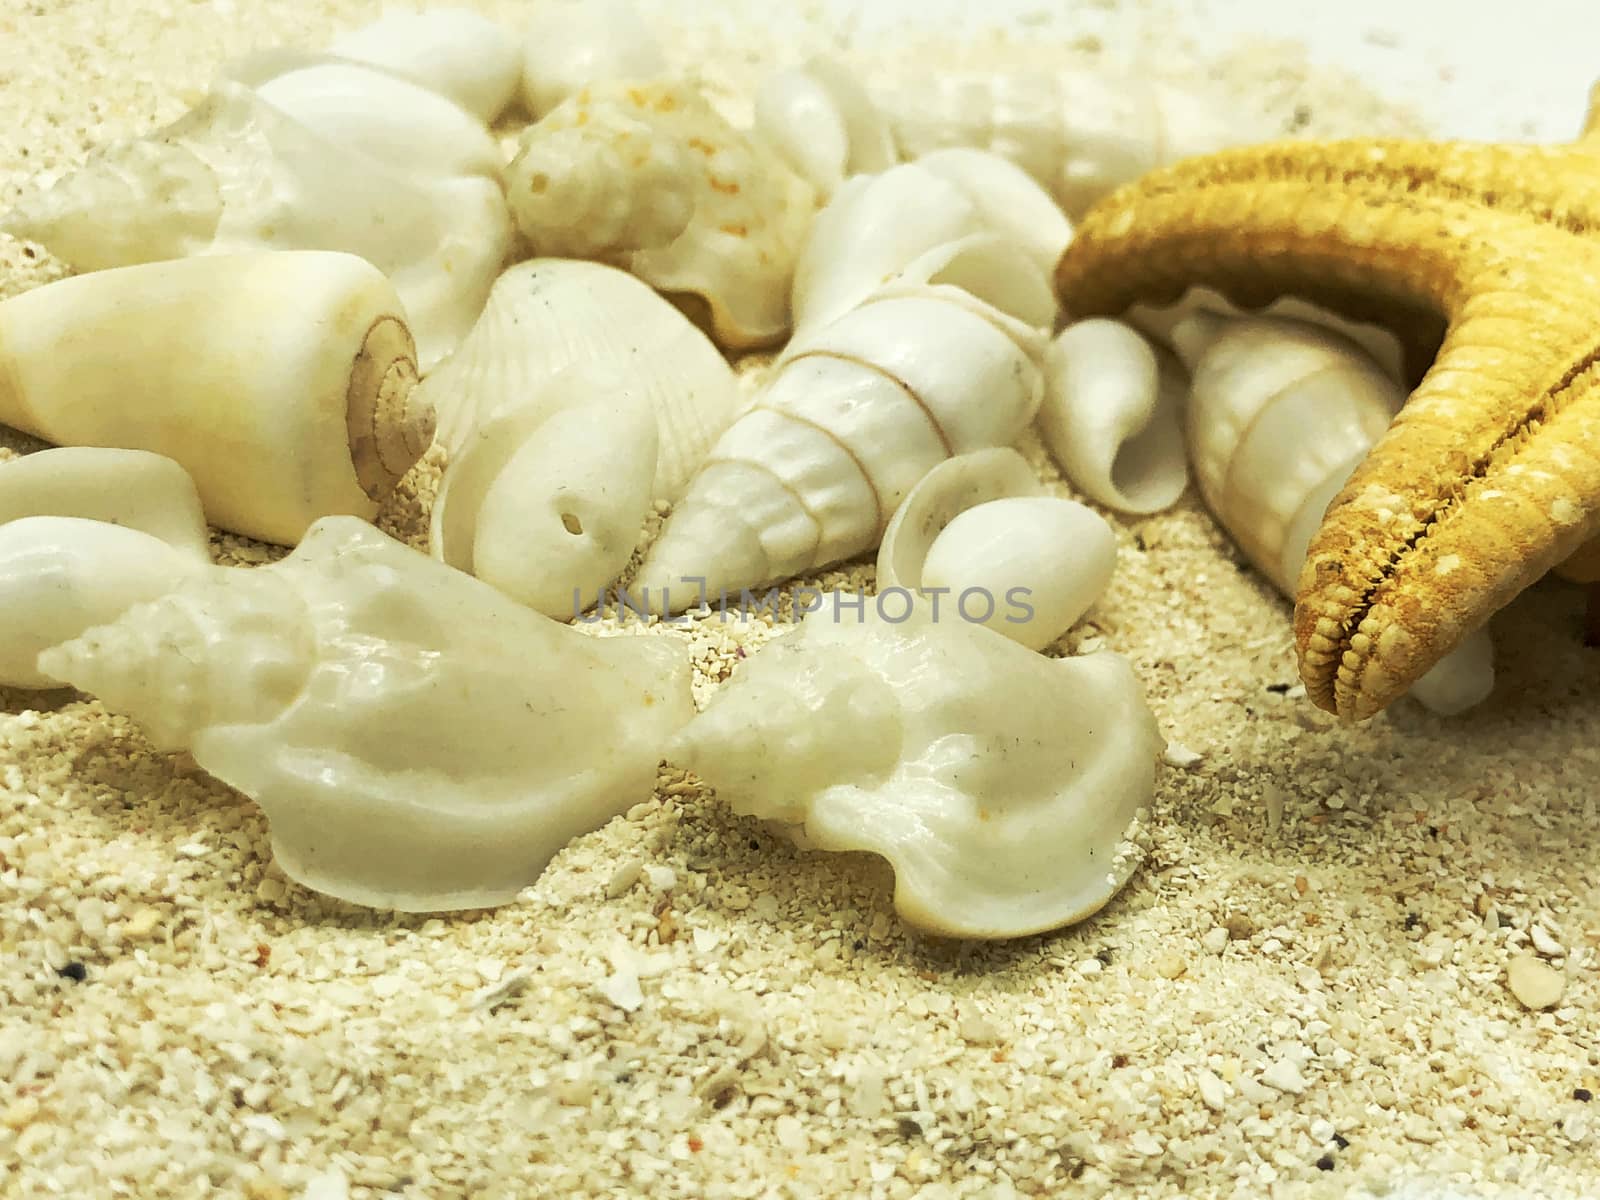 ocean sea shellfish and starfish closeup on sand texture detail summer season travel beach concept